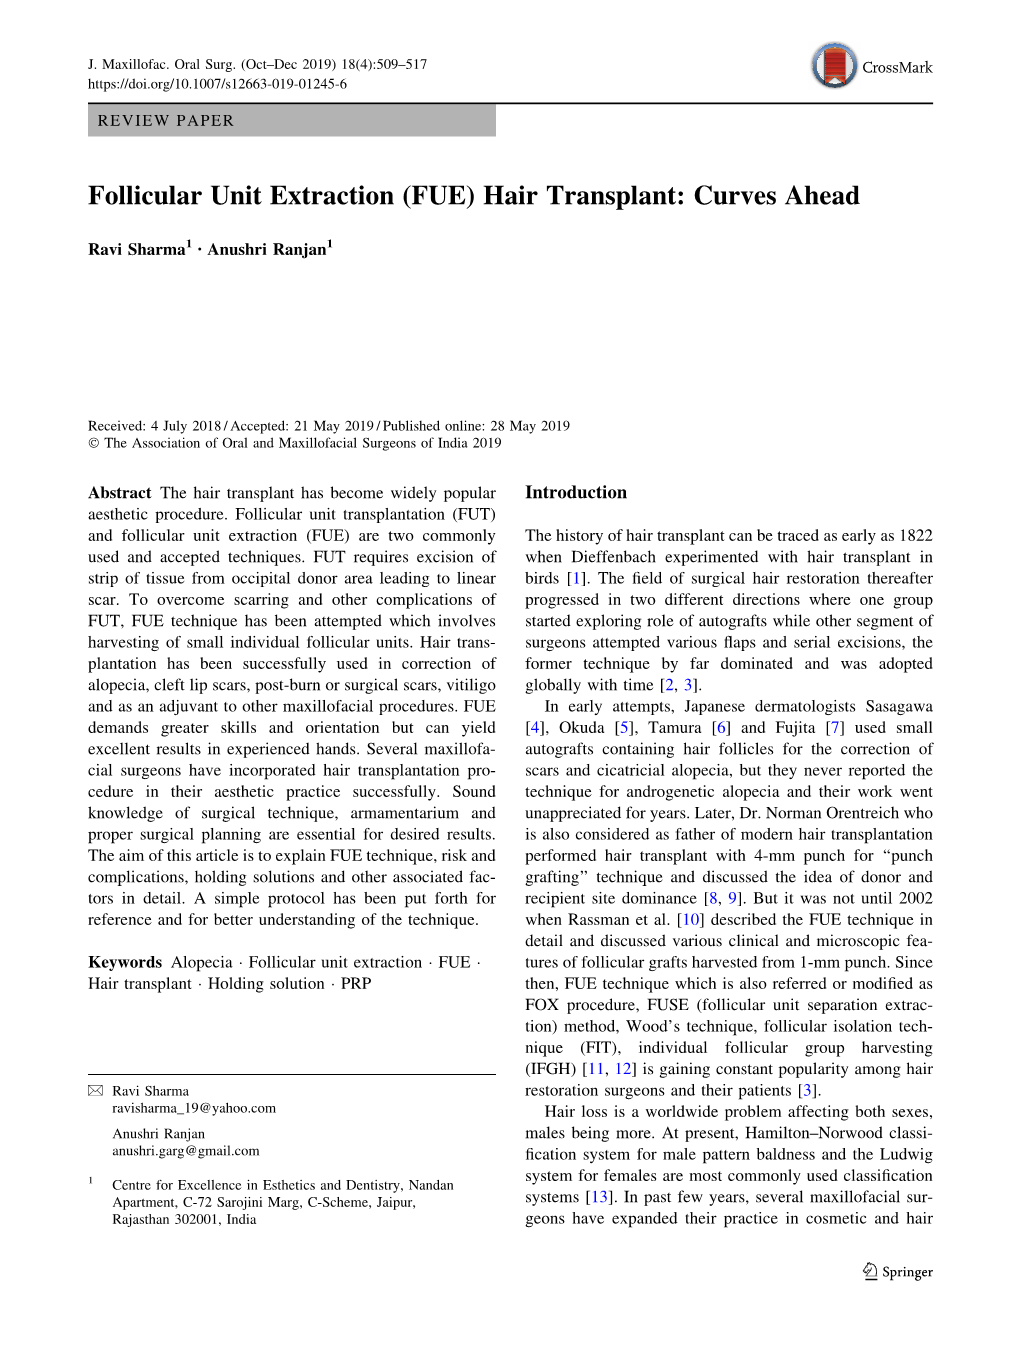 Follicular Unit Extraction (FUE) Hair Transplant: Curves Ahead